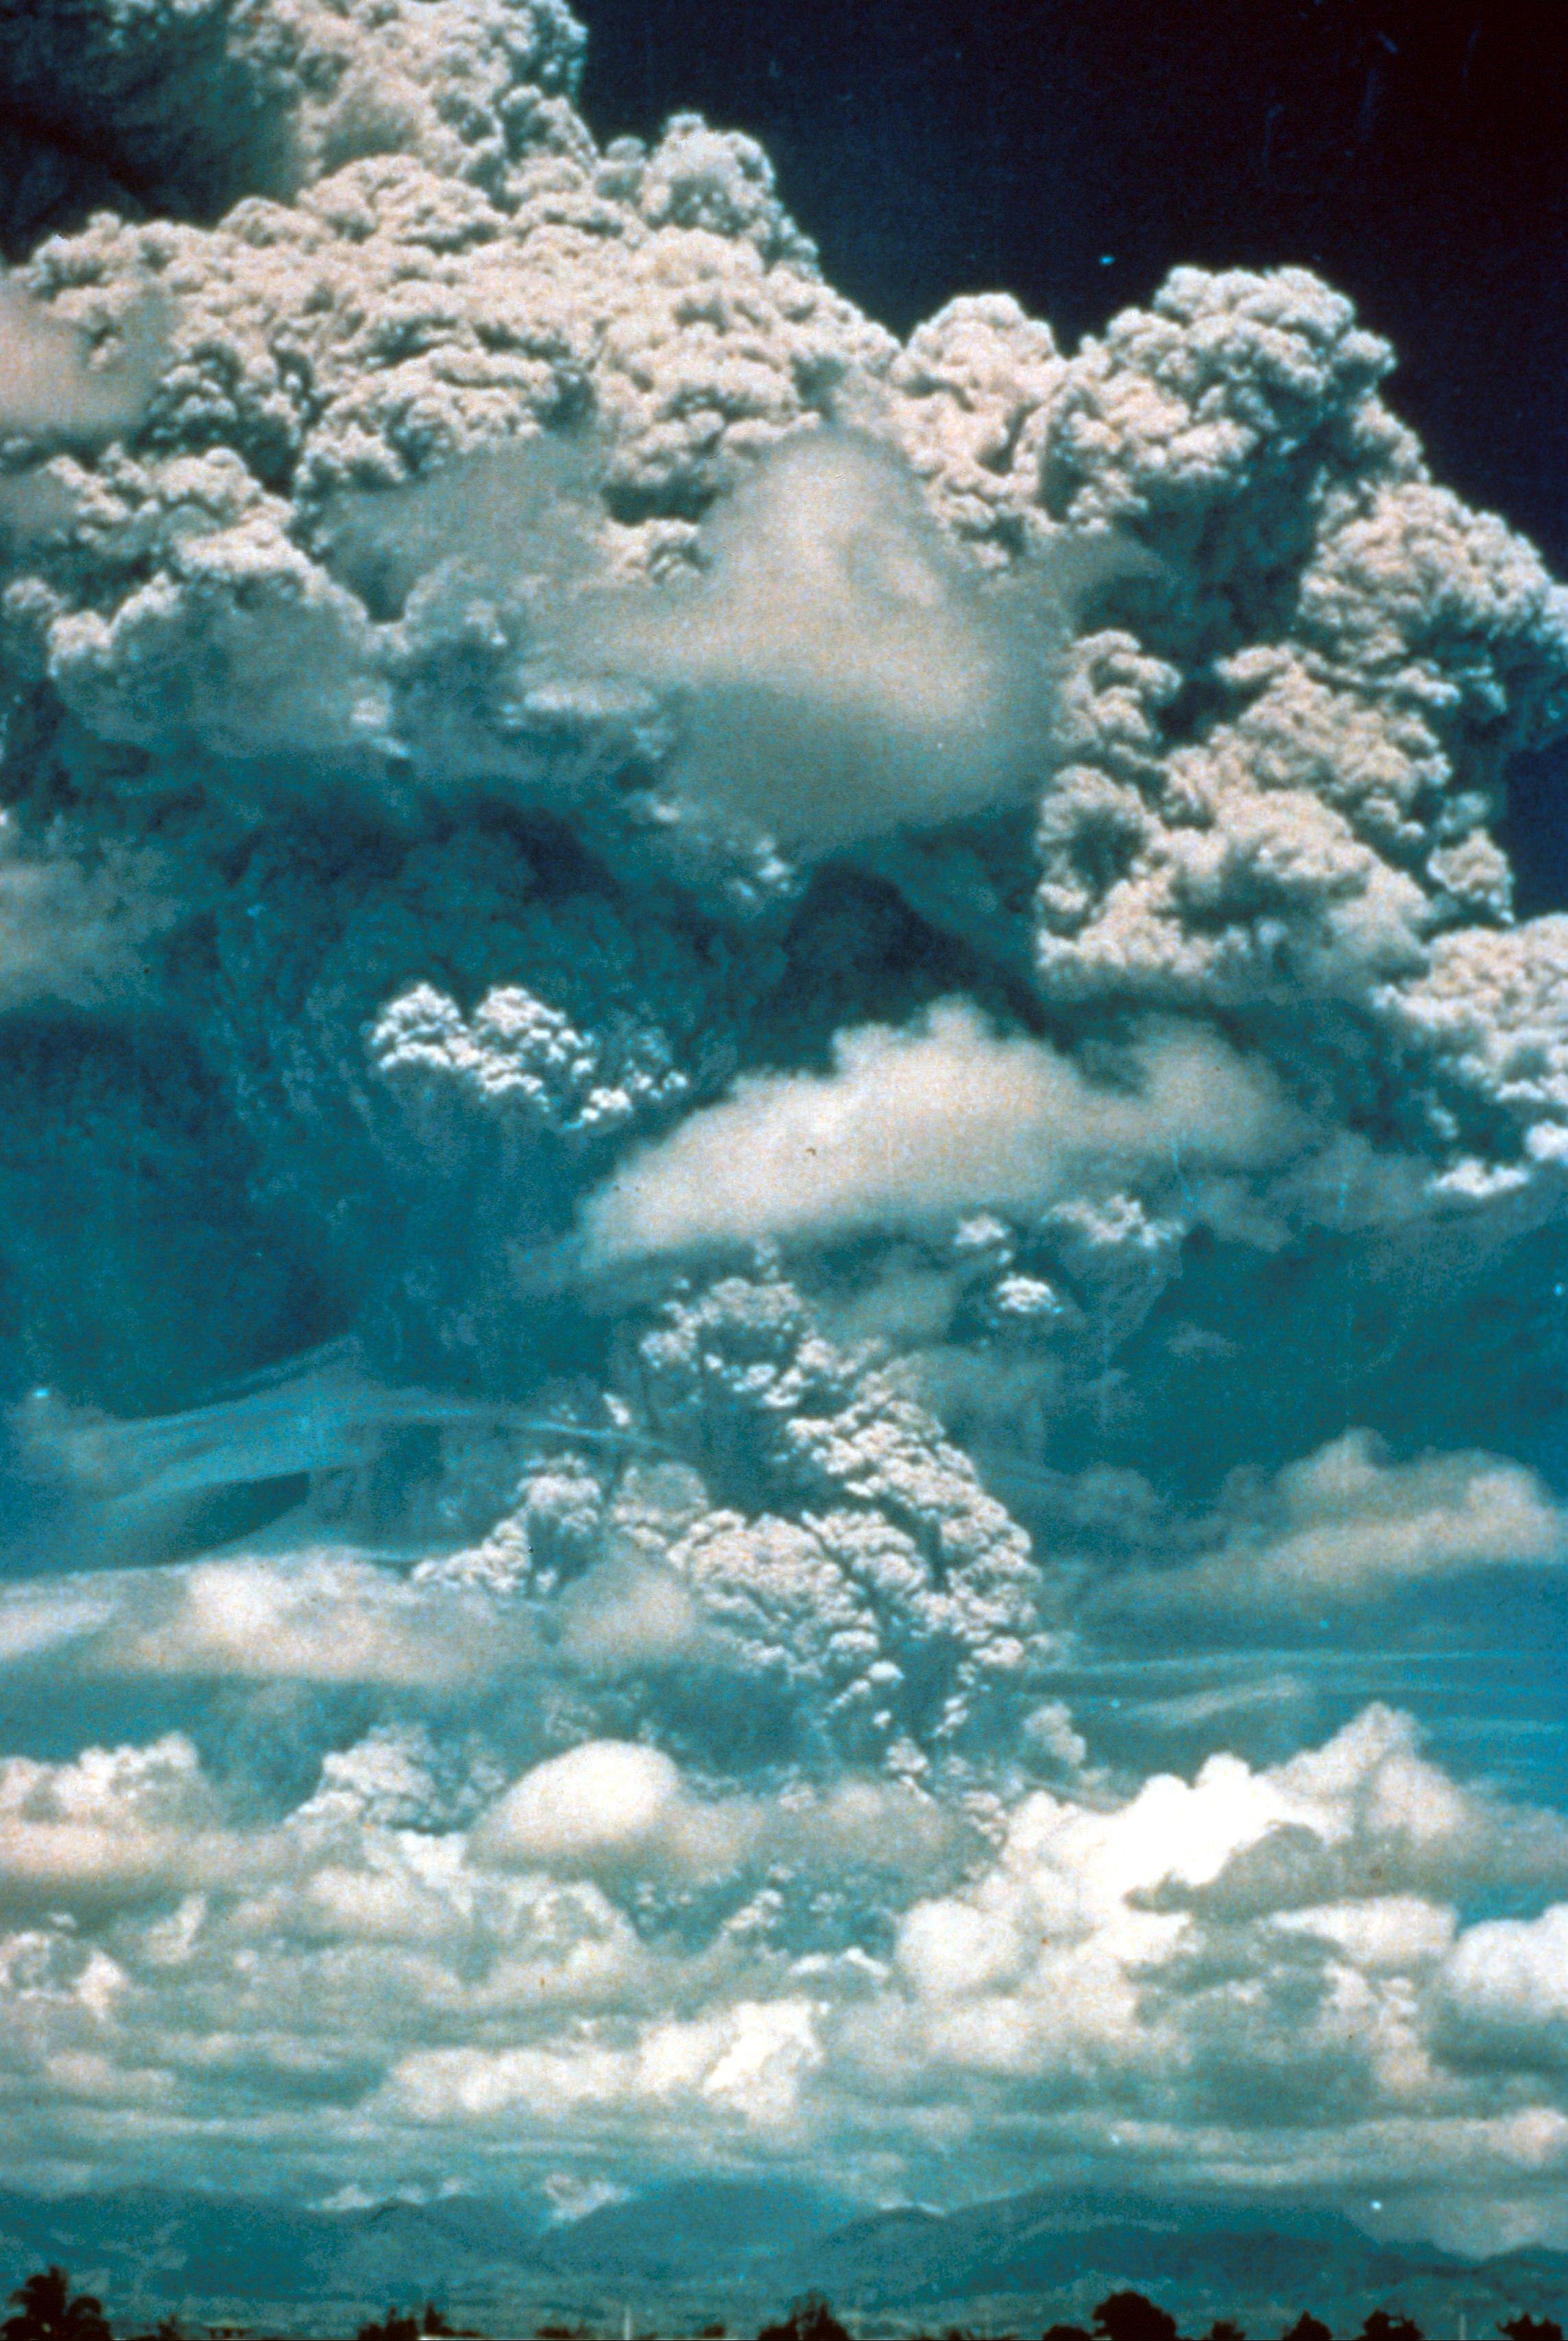 USGS photo of Mount Pinatubo erupting